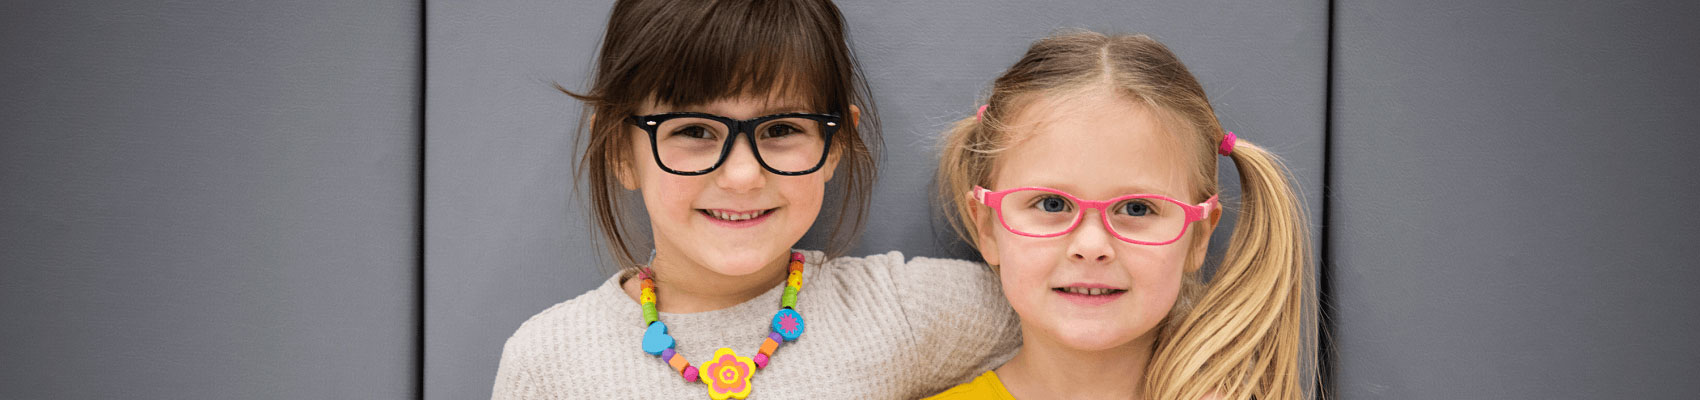 Mariposa Oval Lined Bifocal Glasses - Pastel Pink | Kids' Eyeglasses ...